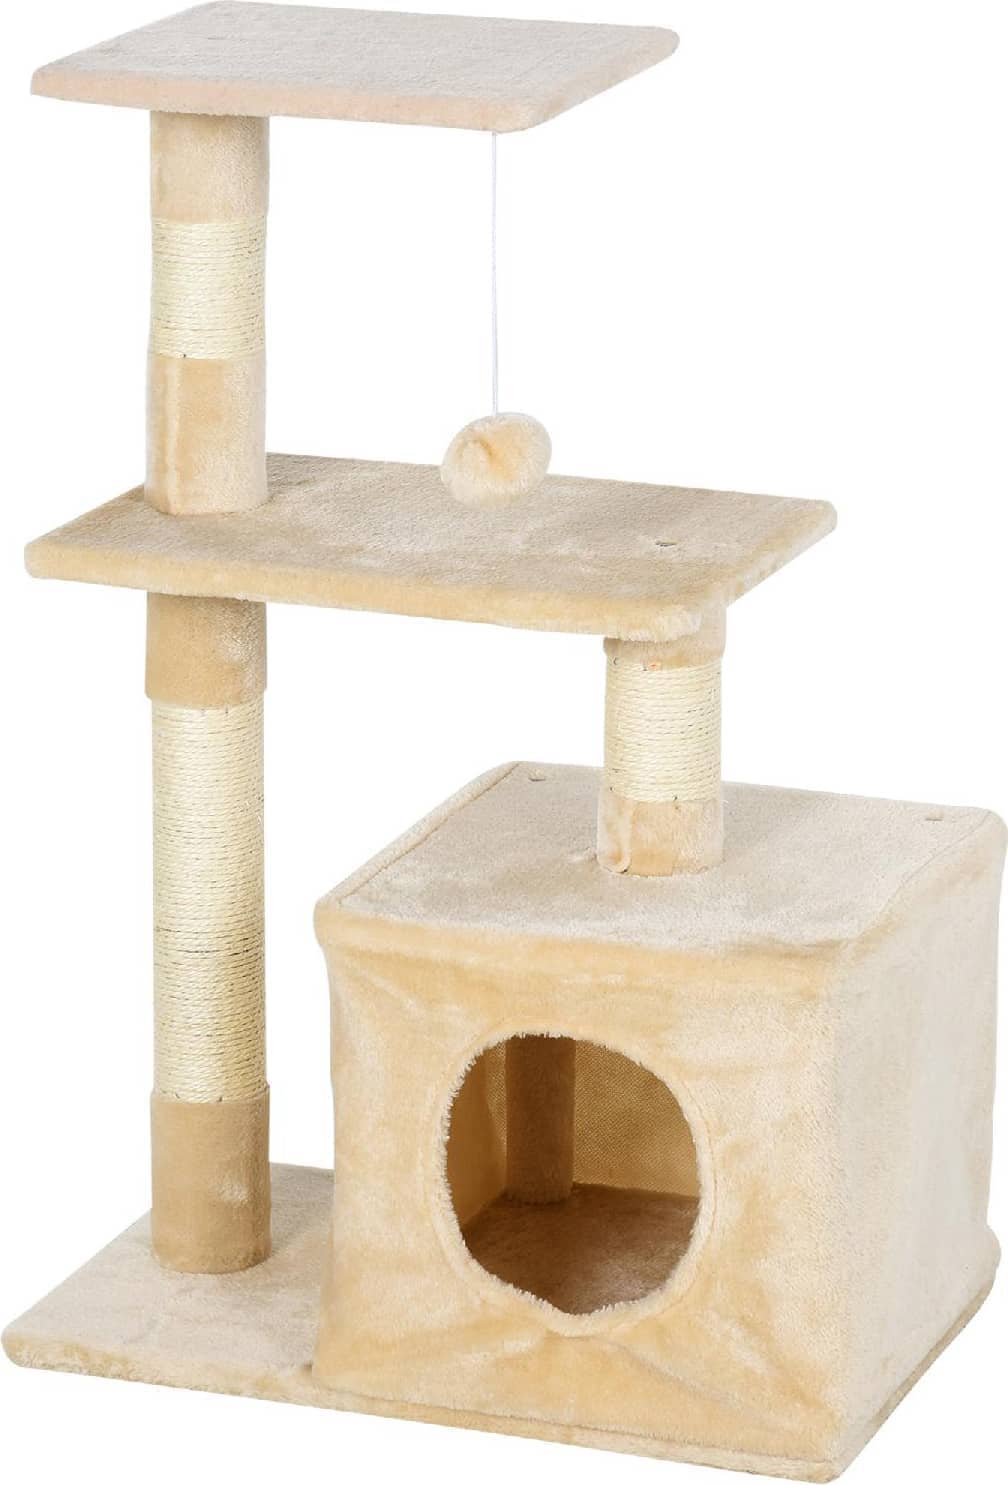 allmypets d30d85cg tiragraffi per gatti con cuccia per gatti pallina corda in sisal peluche in legno beige - d30d85cg